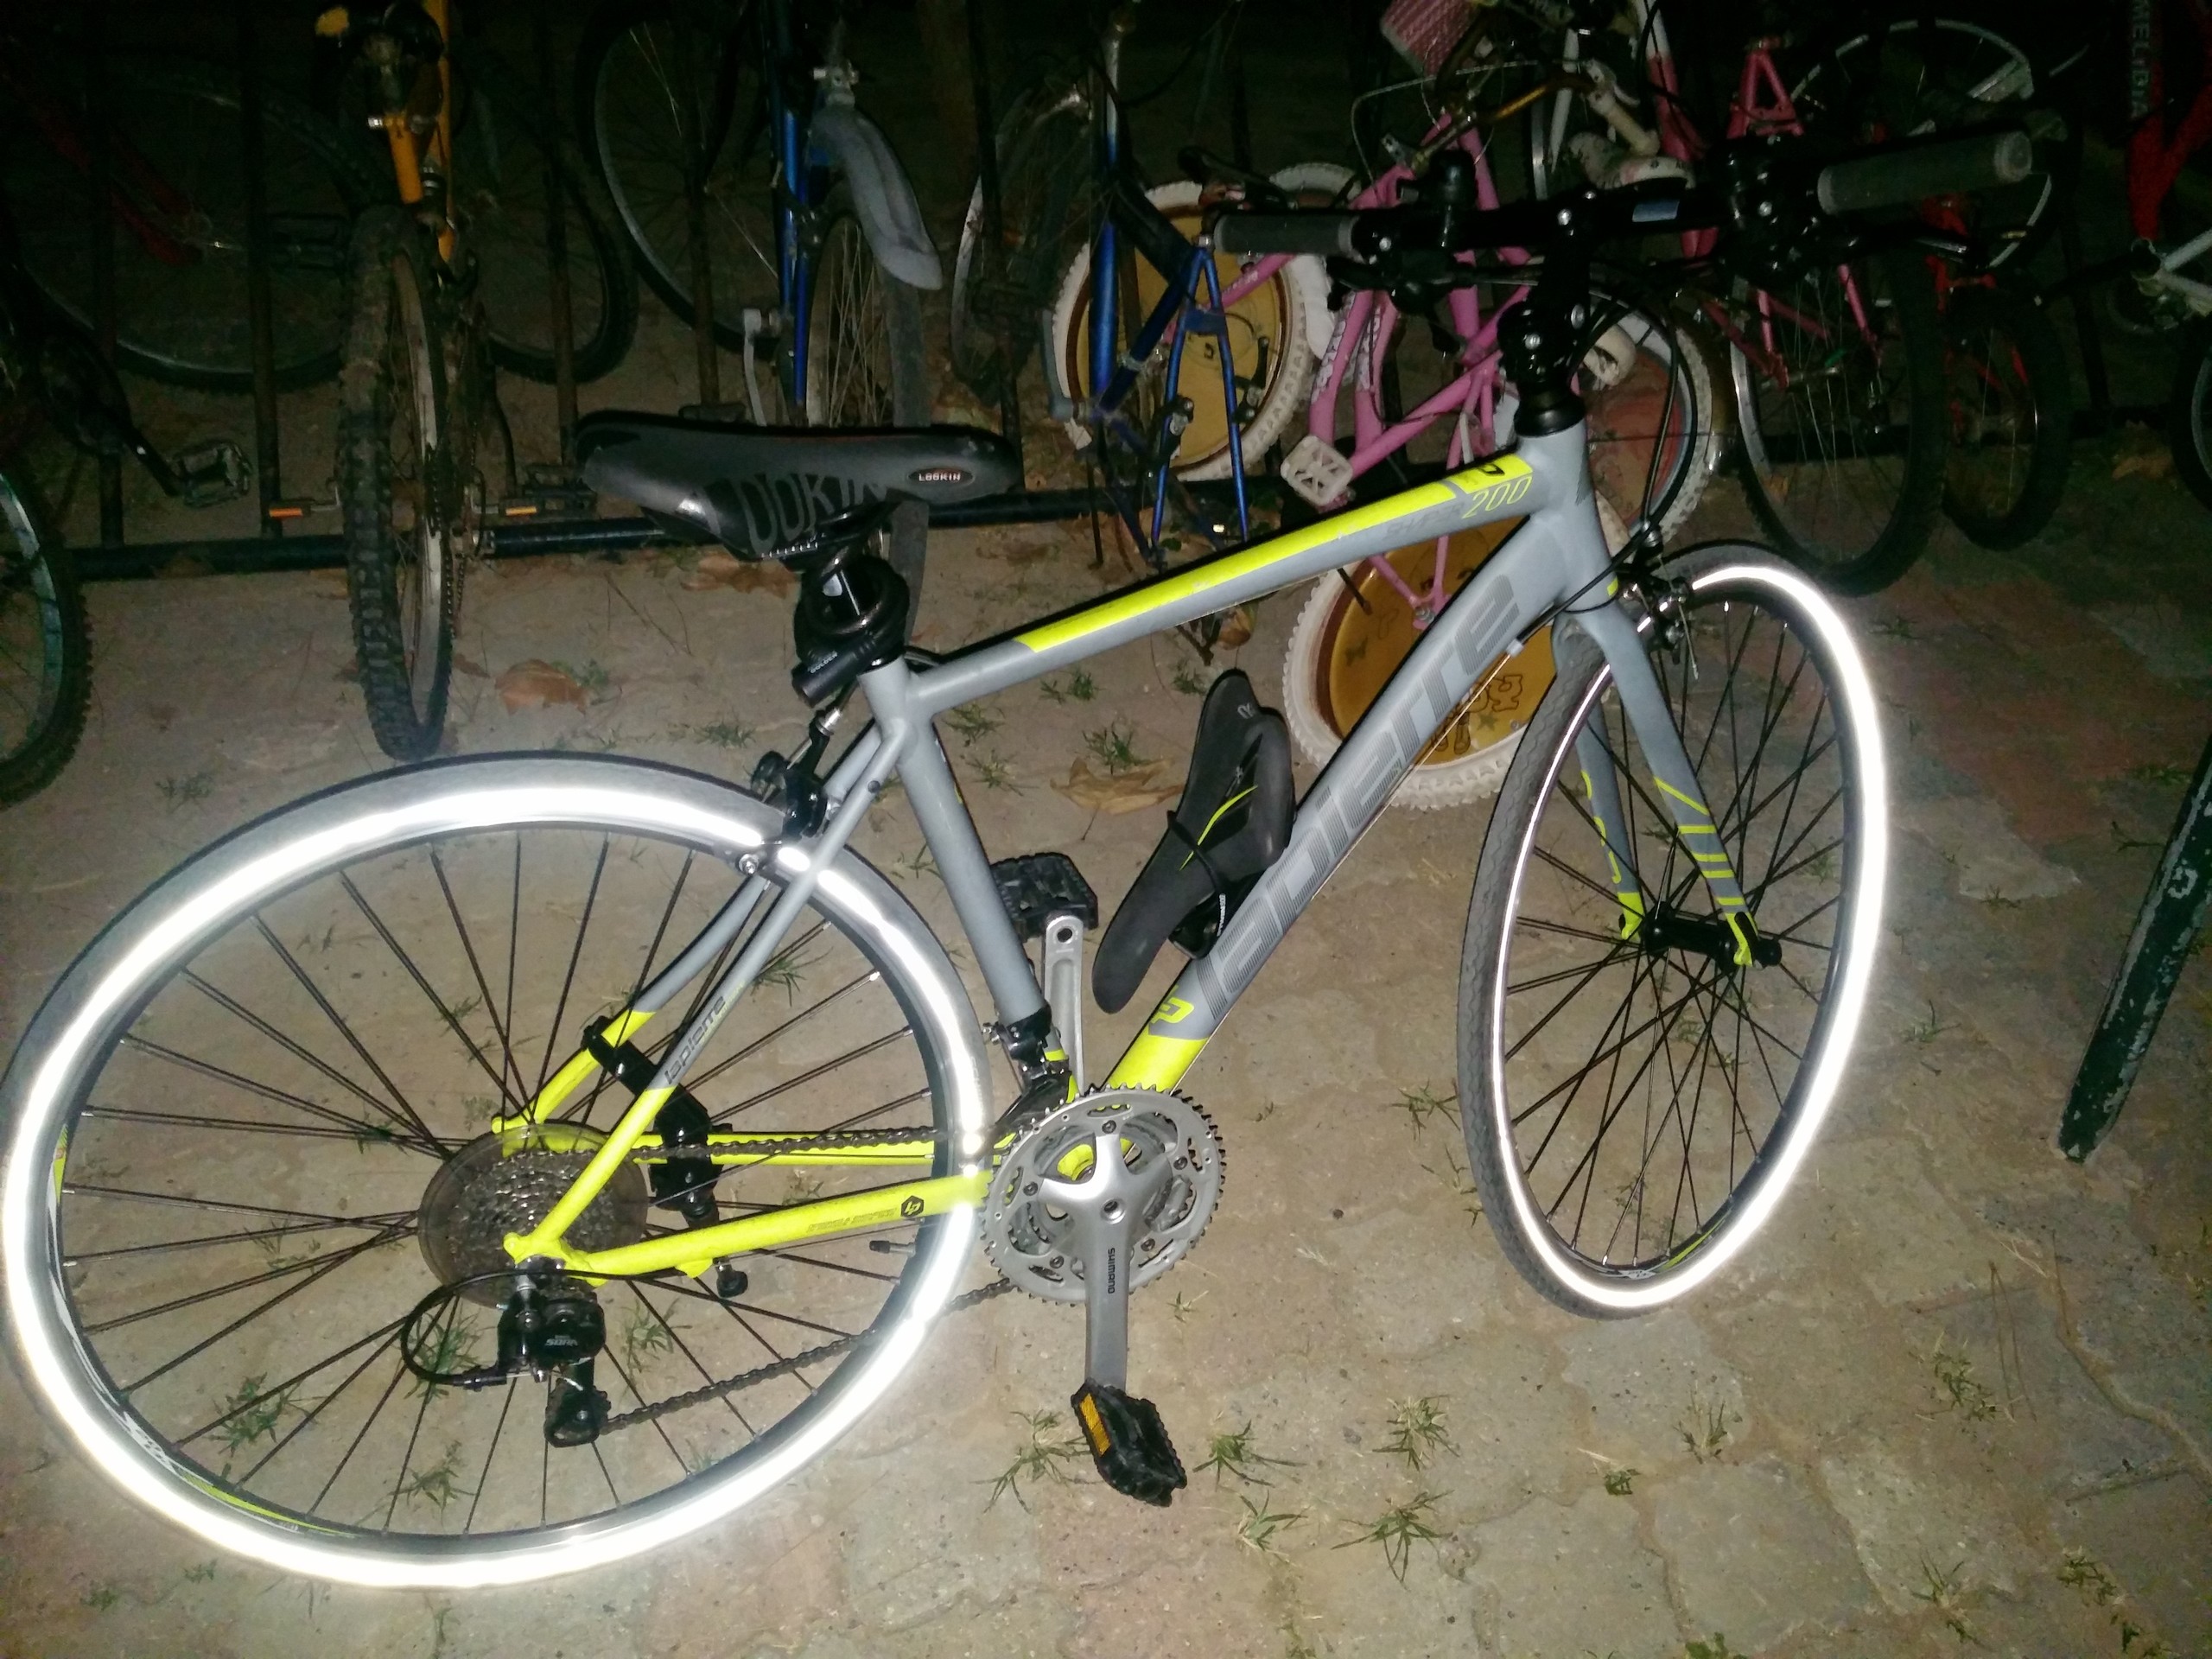 Ps4 slim ile takaslı bisiklet